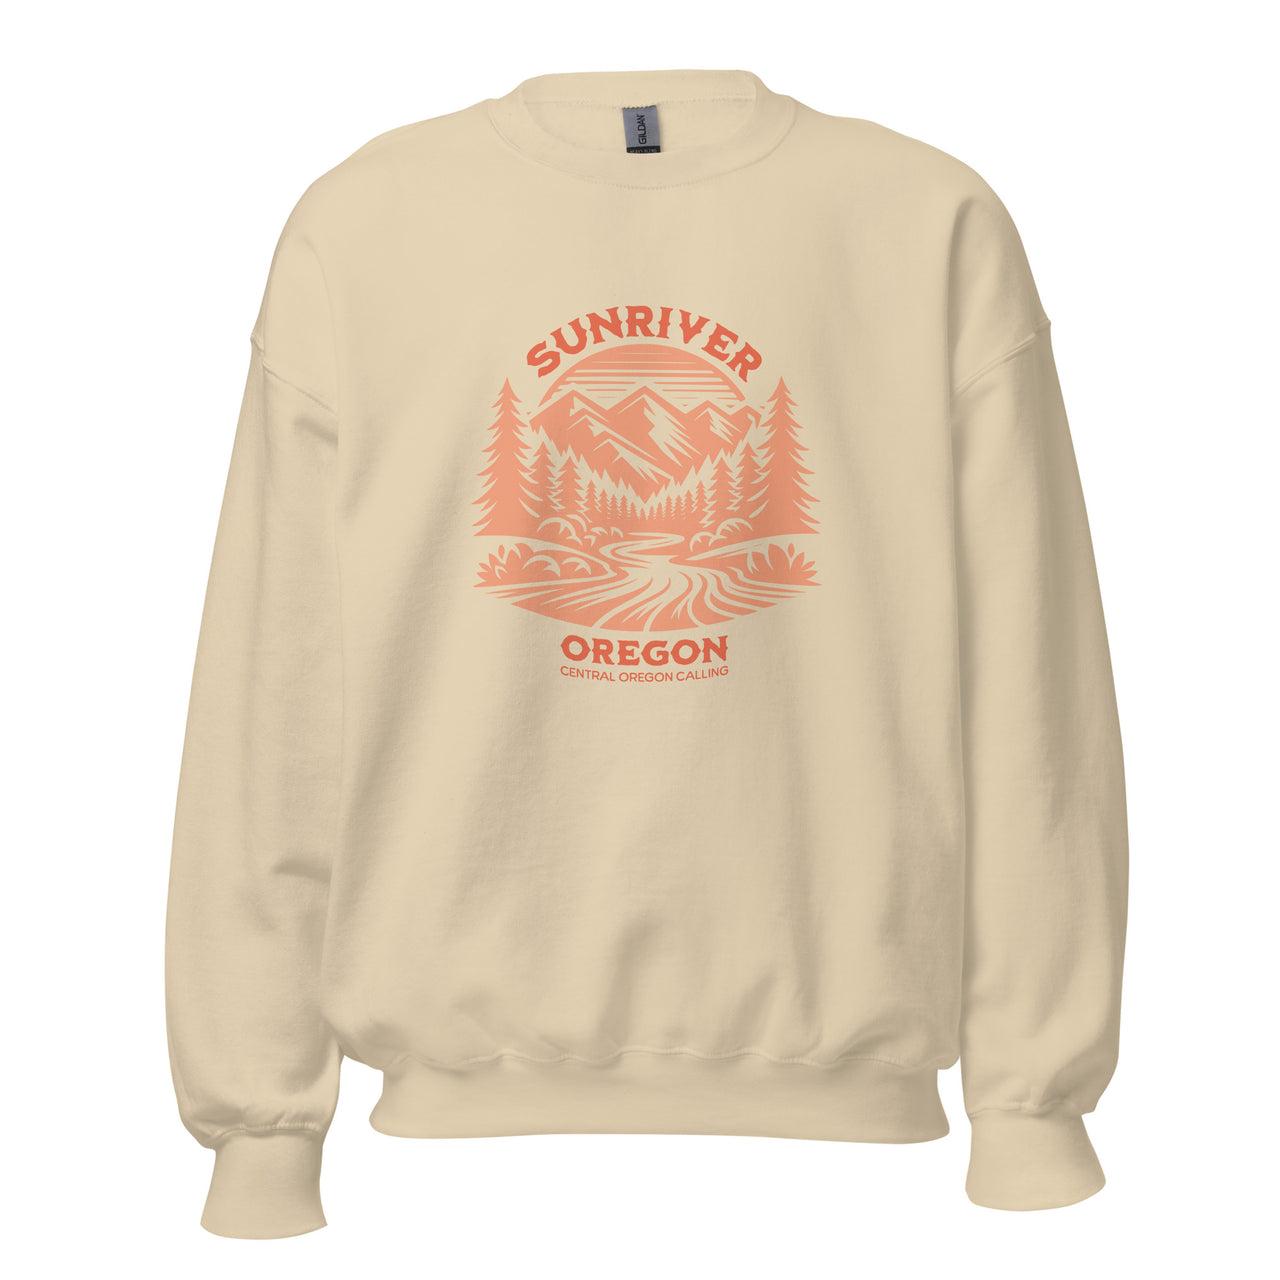 Sunriver Oregon - Unisex Sweatshirt